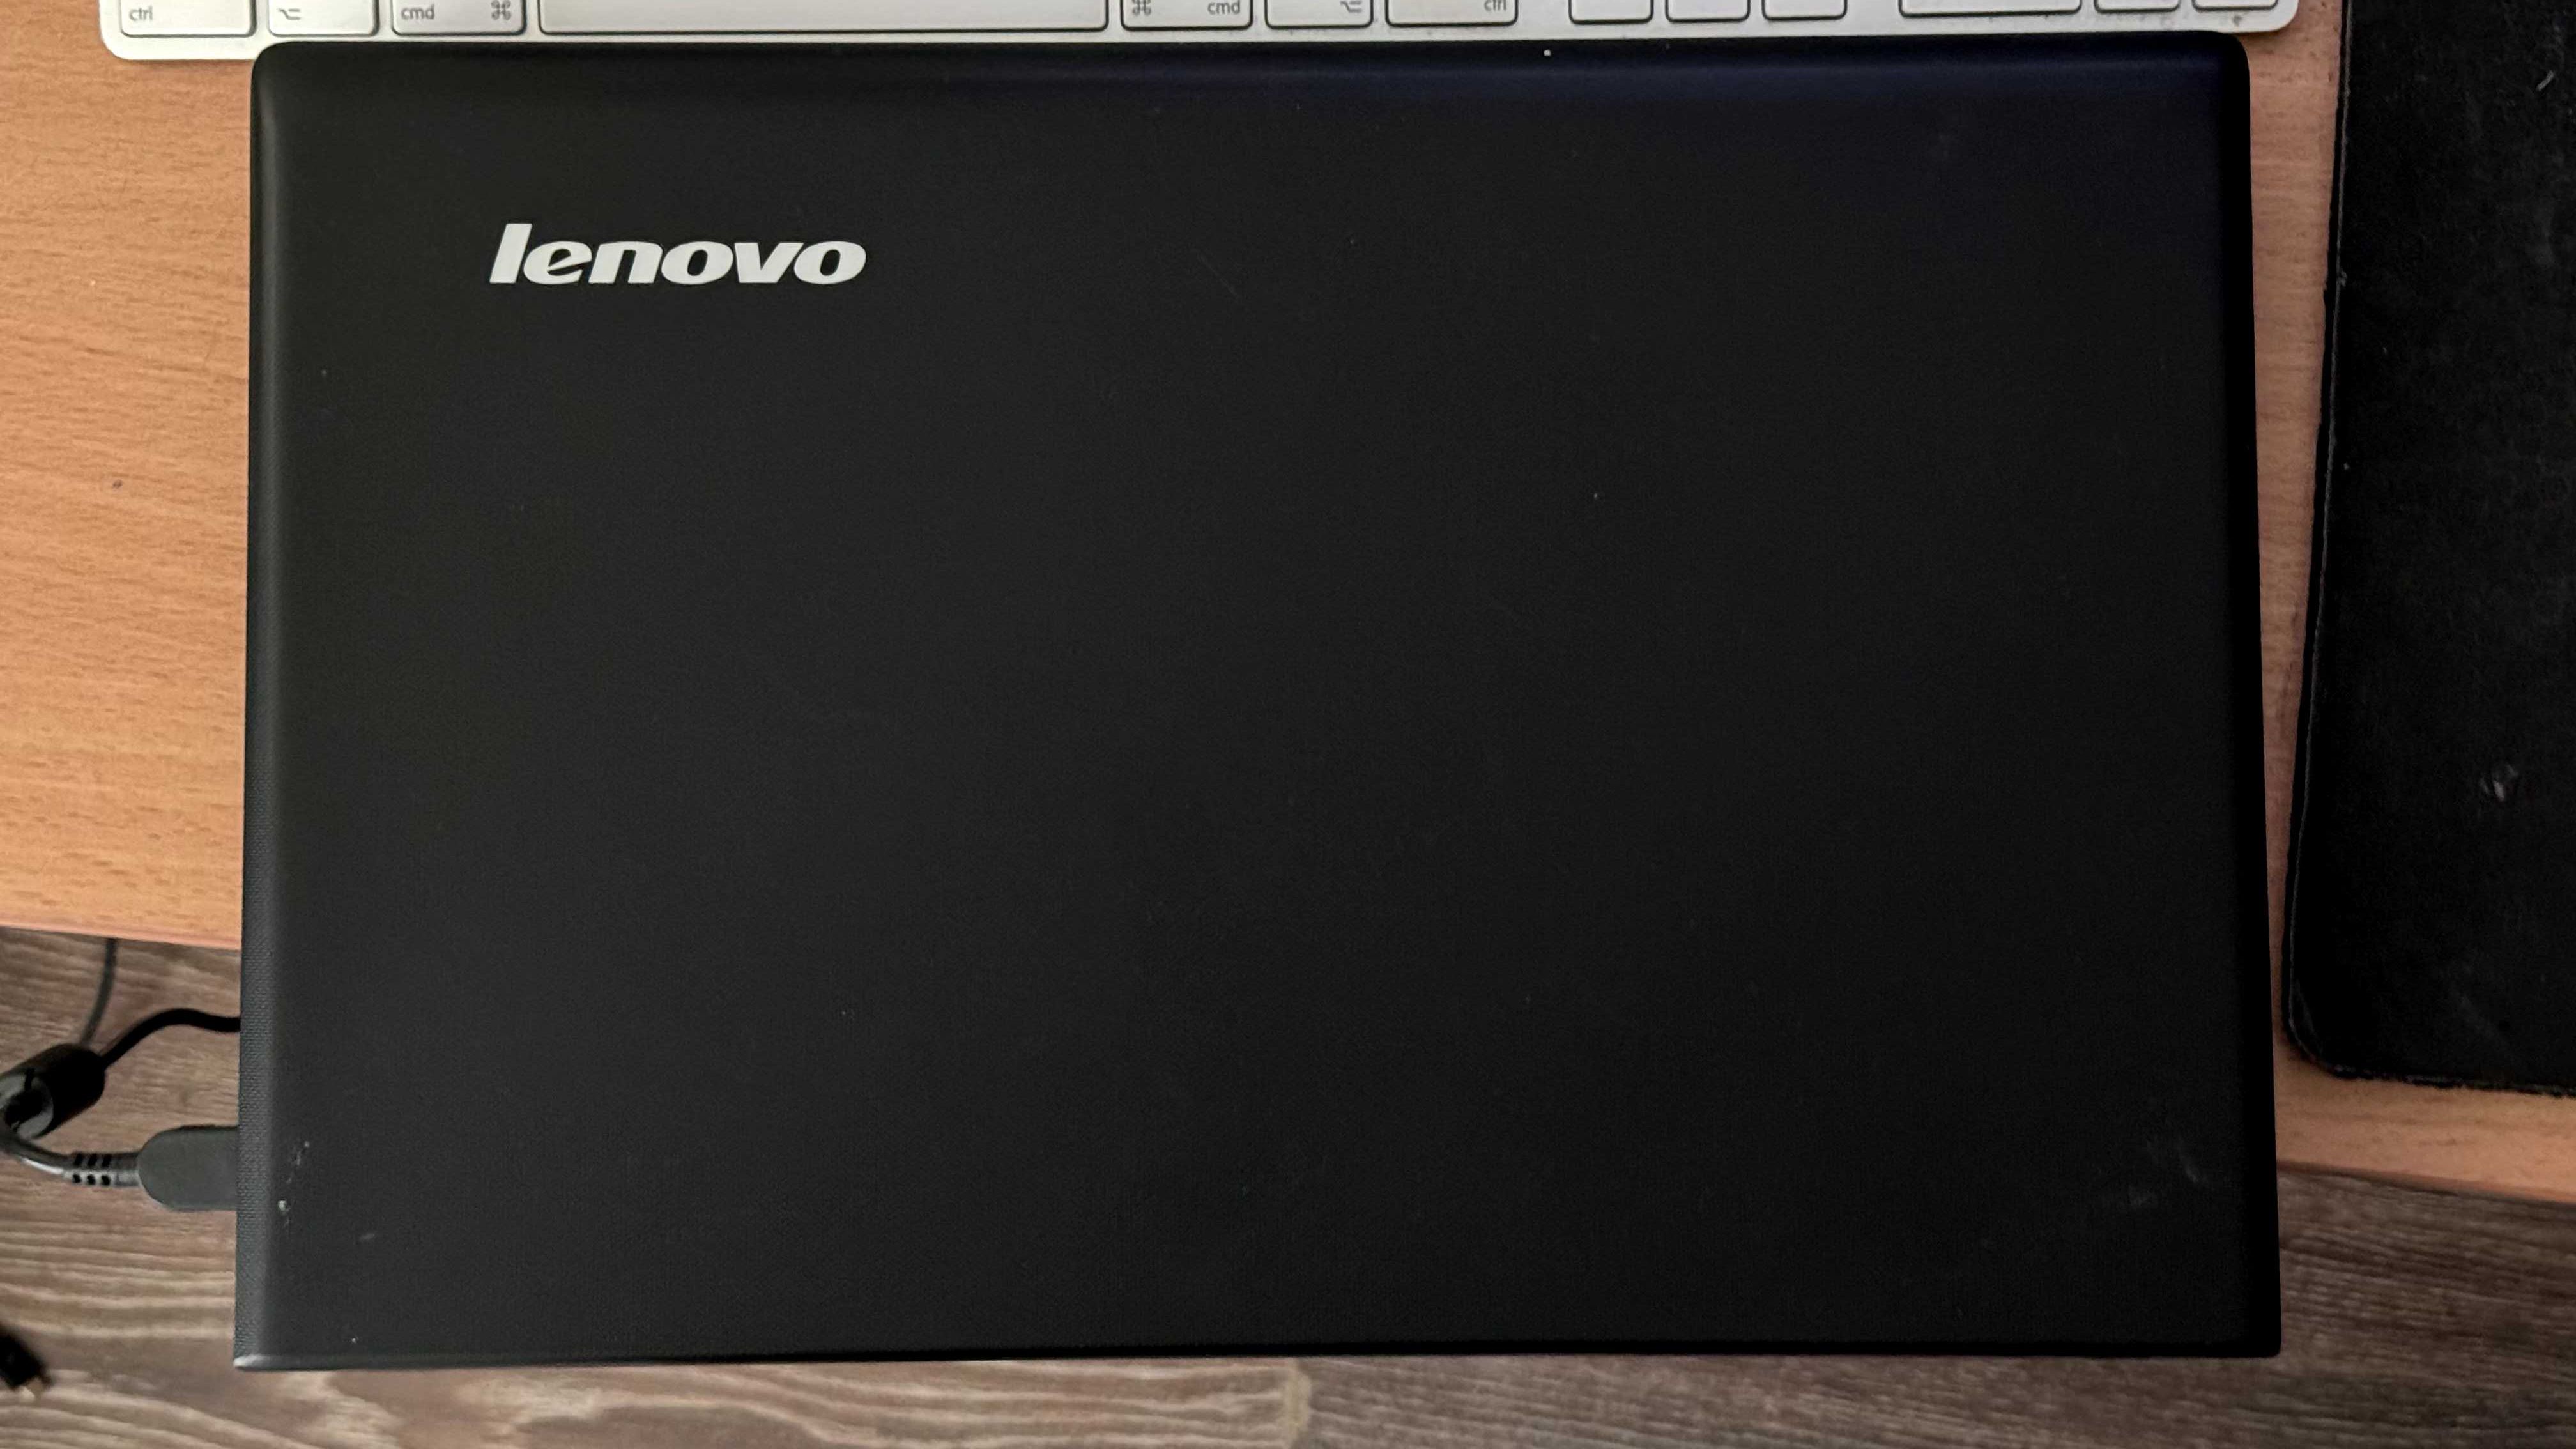 Ноутбук Lenovo g505 под восстановление или на запчасти